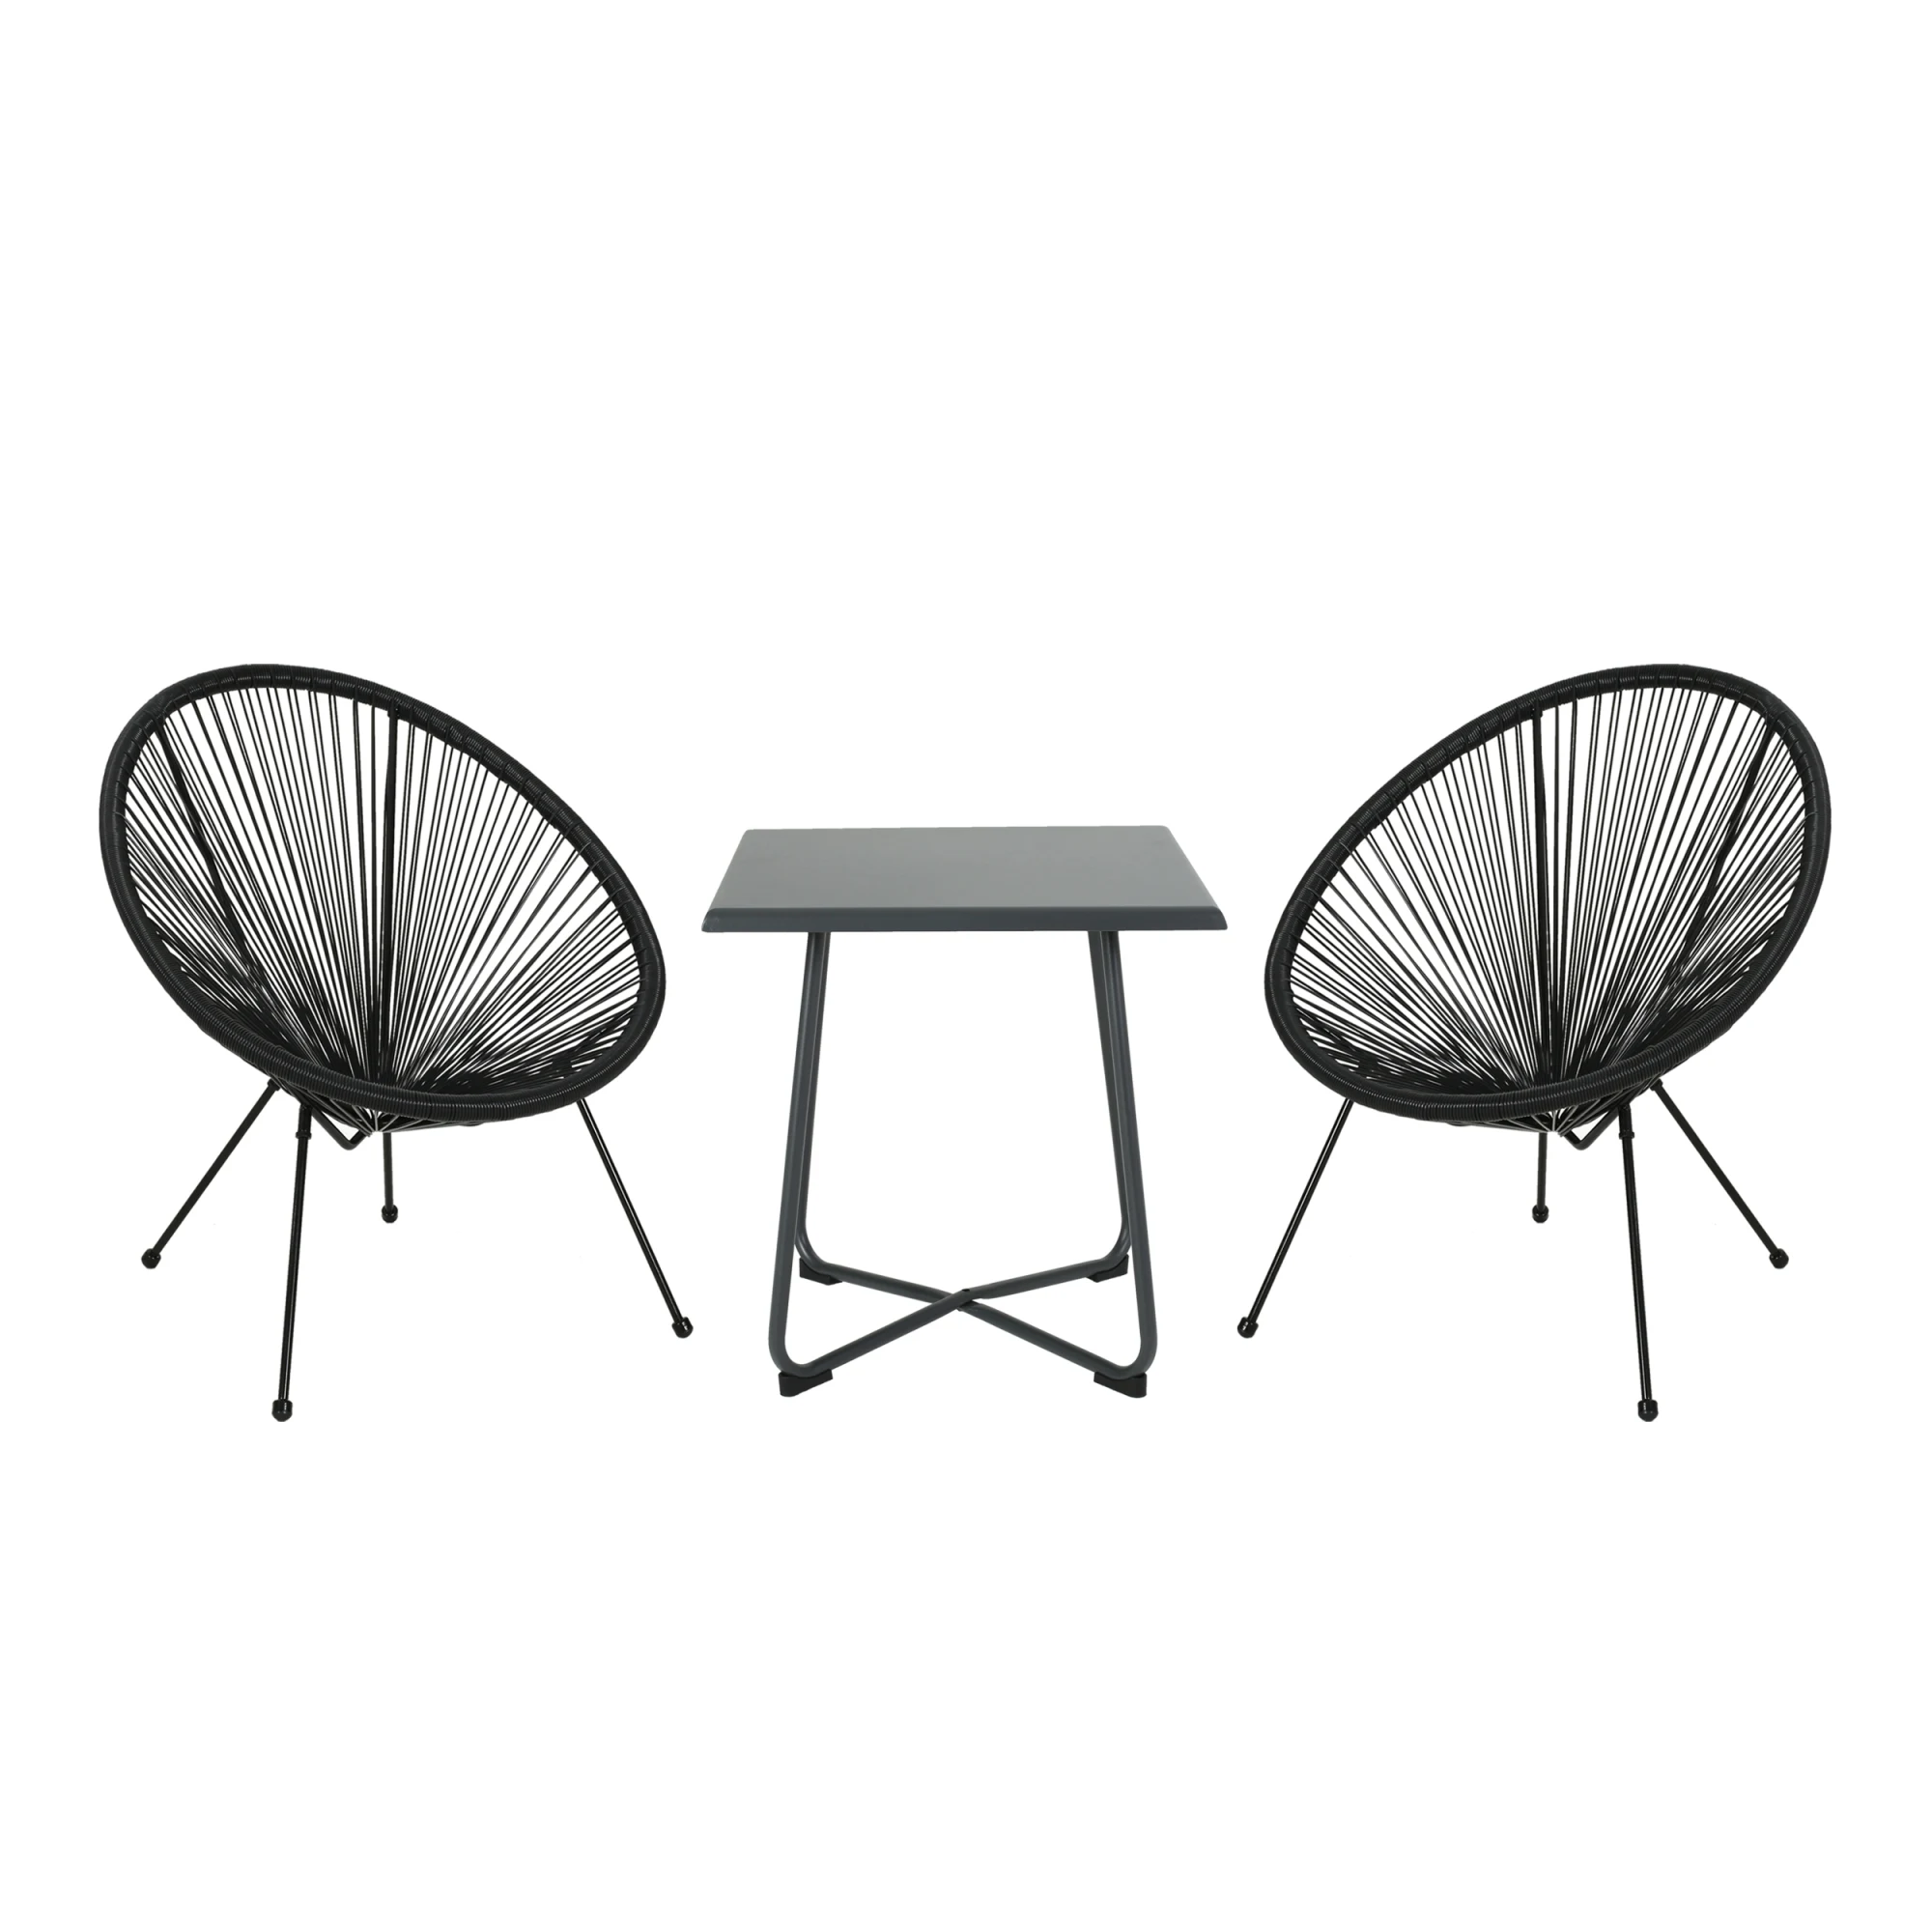 Hammock Weave Rattan Chair set of 2